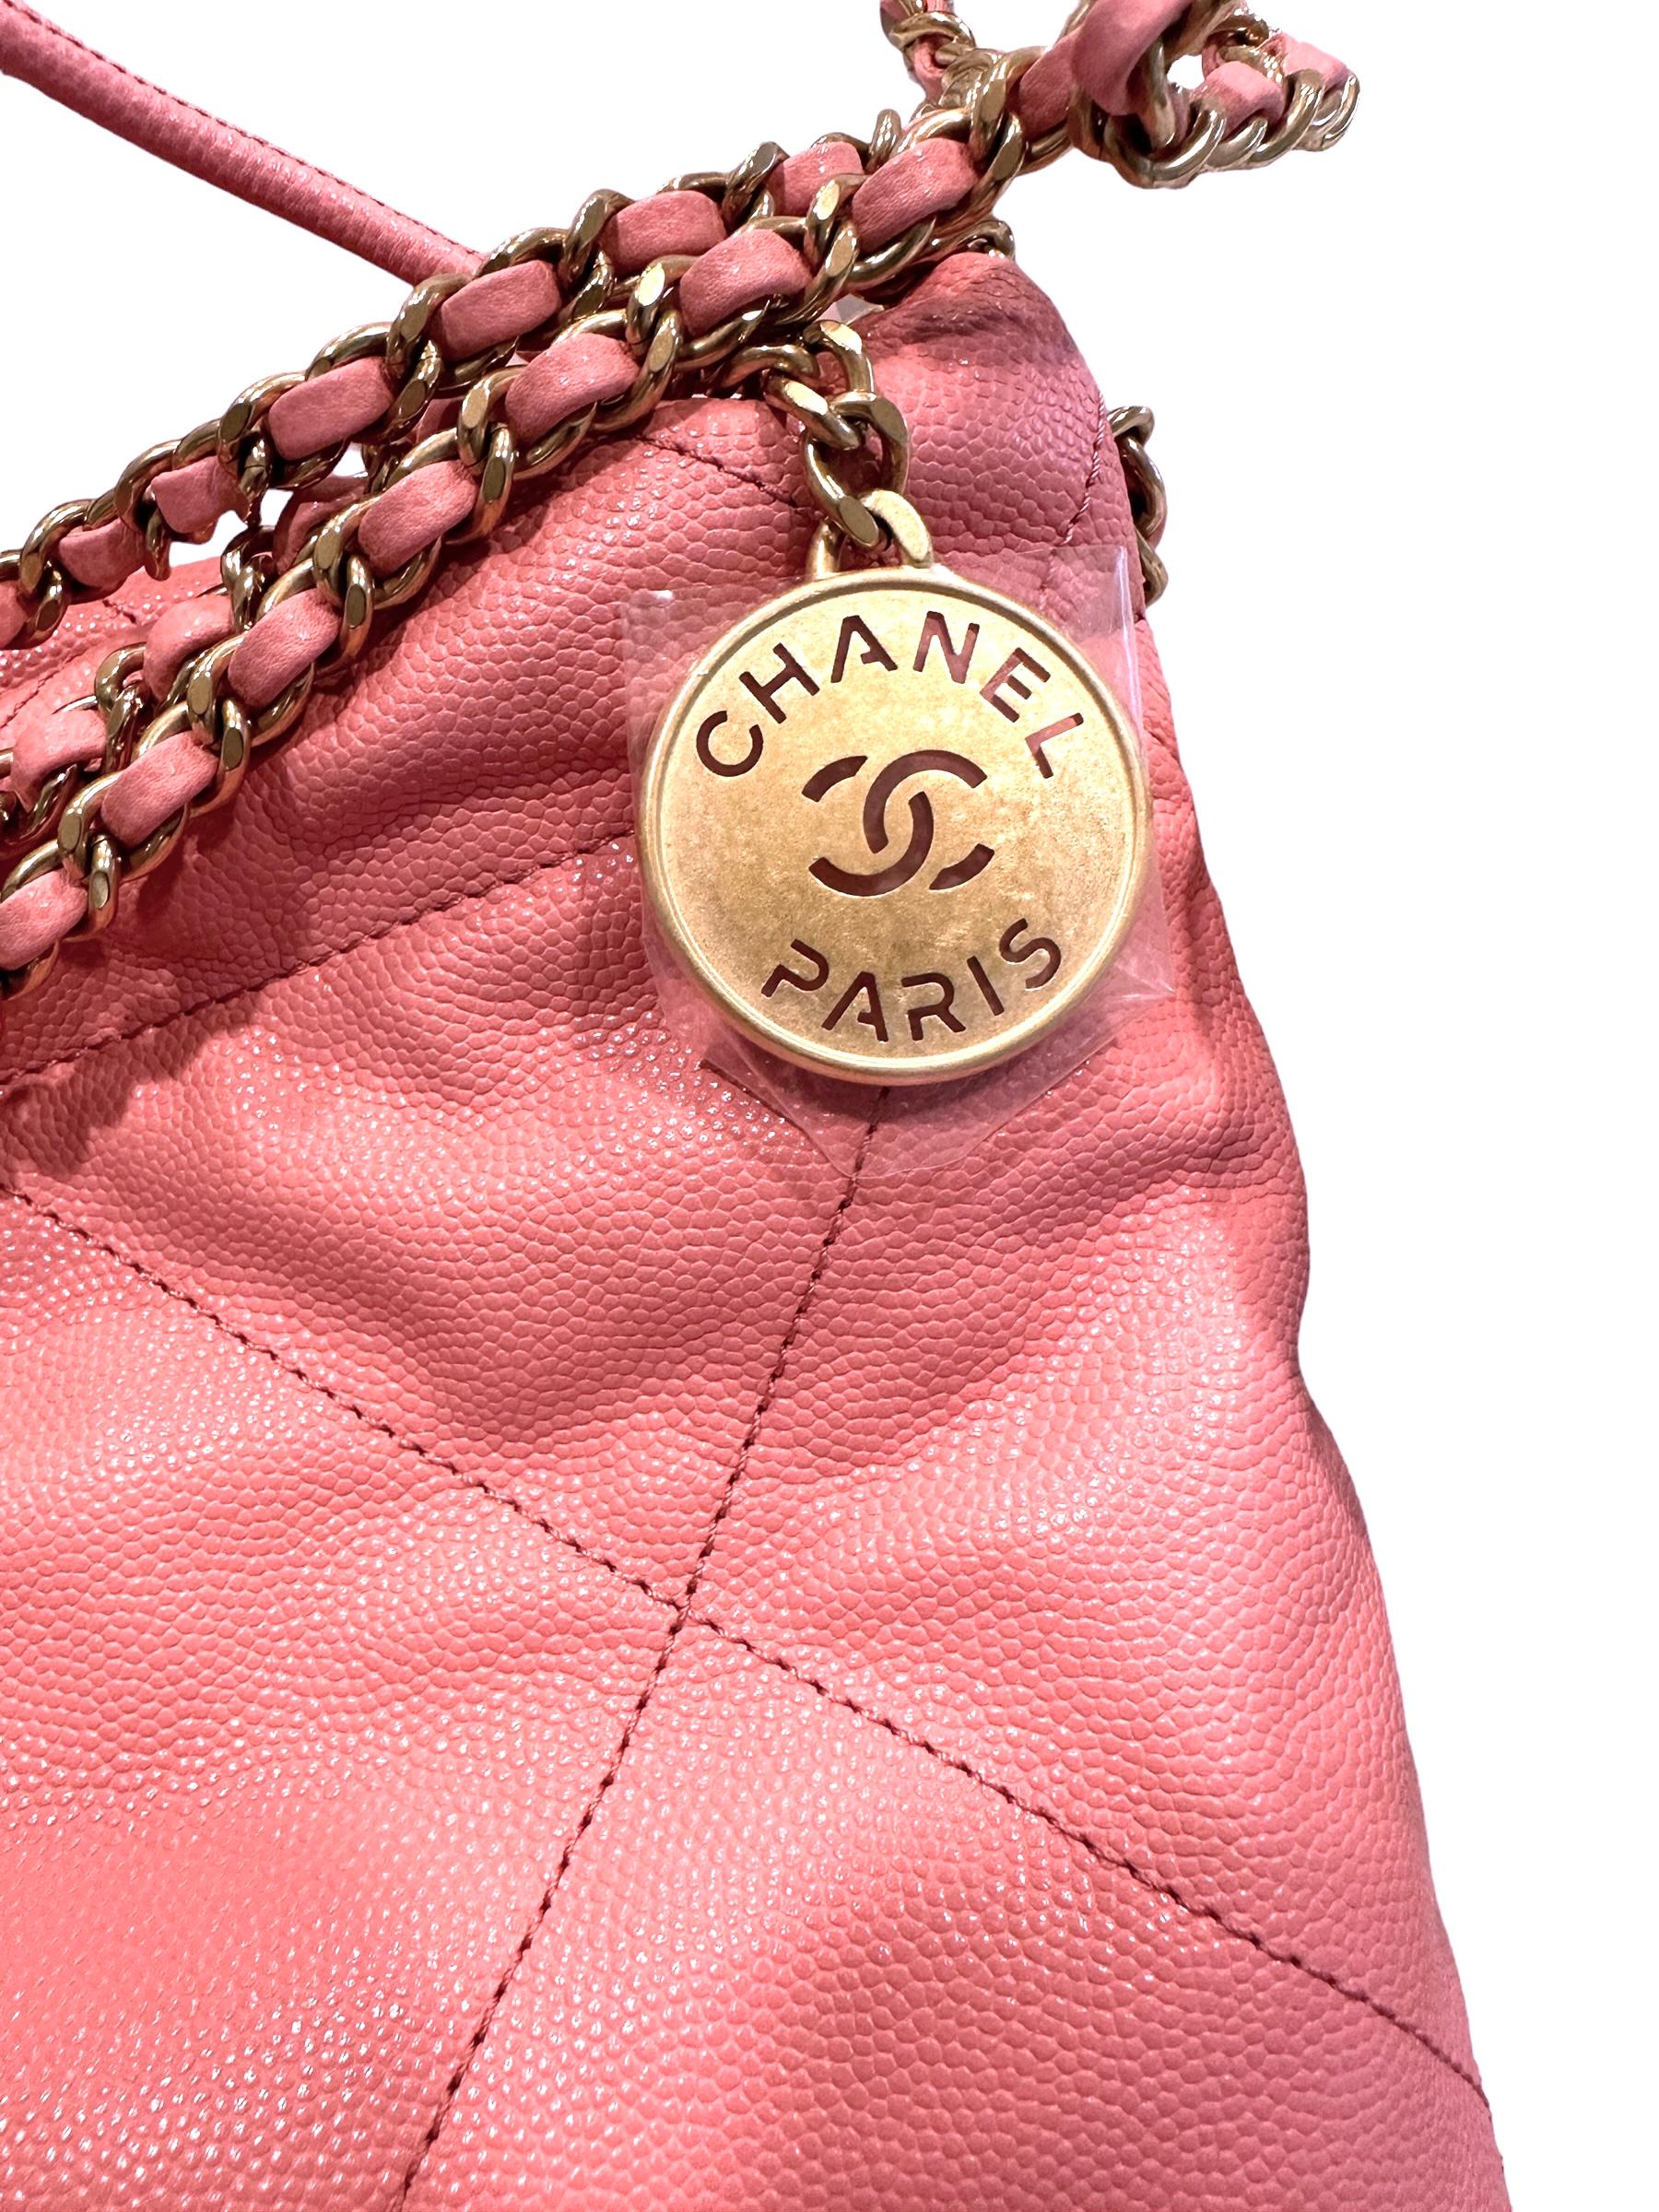 CHANEL 22 Mini Handbag Pink Coral Goldtone NEW For Sale 9